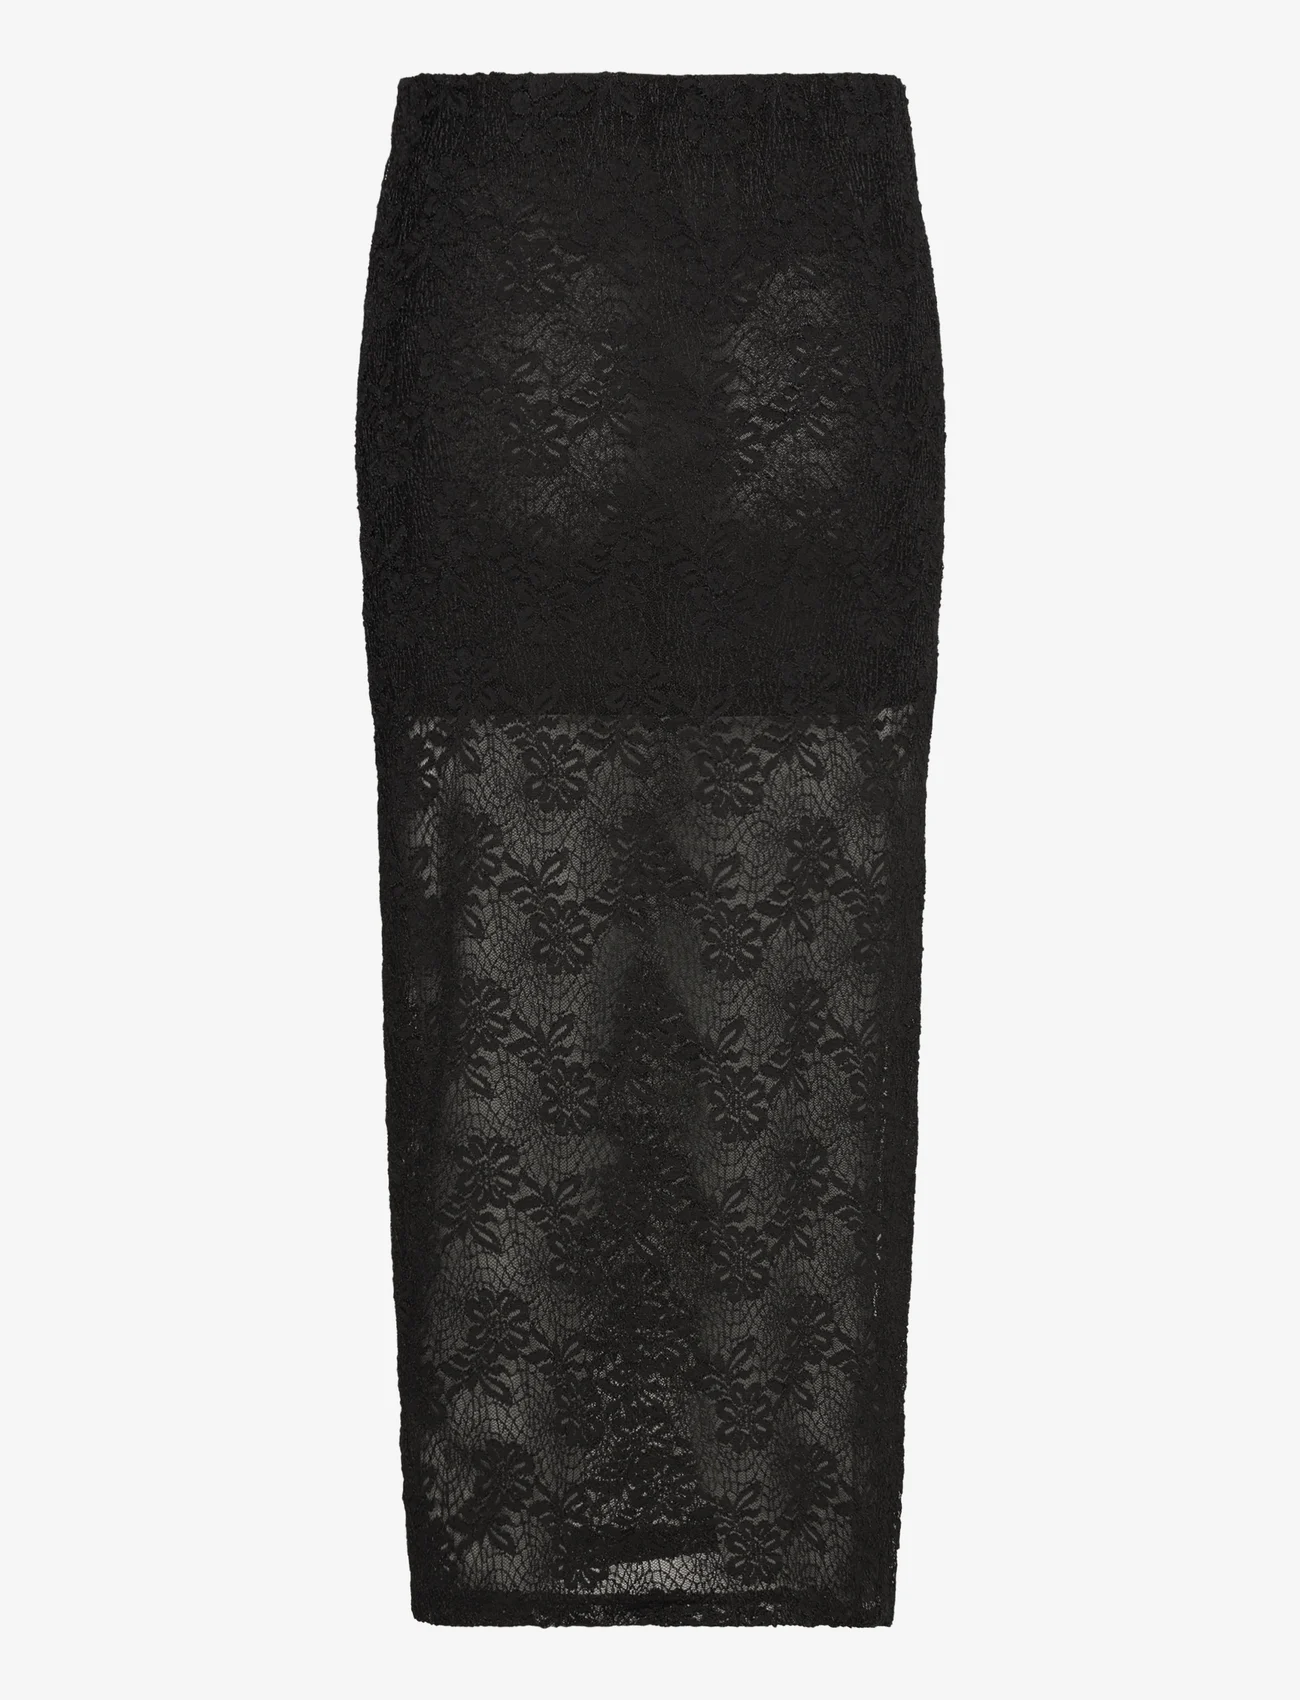 Sofie Schnoor - Slim skirt - midi kjolar - black - 1